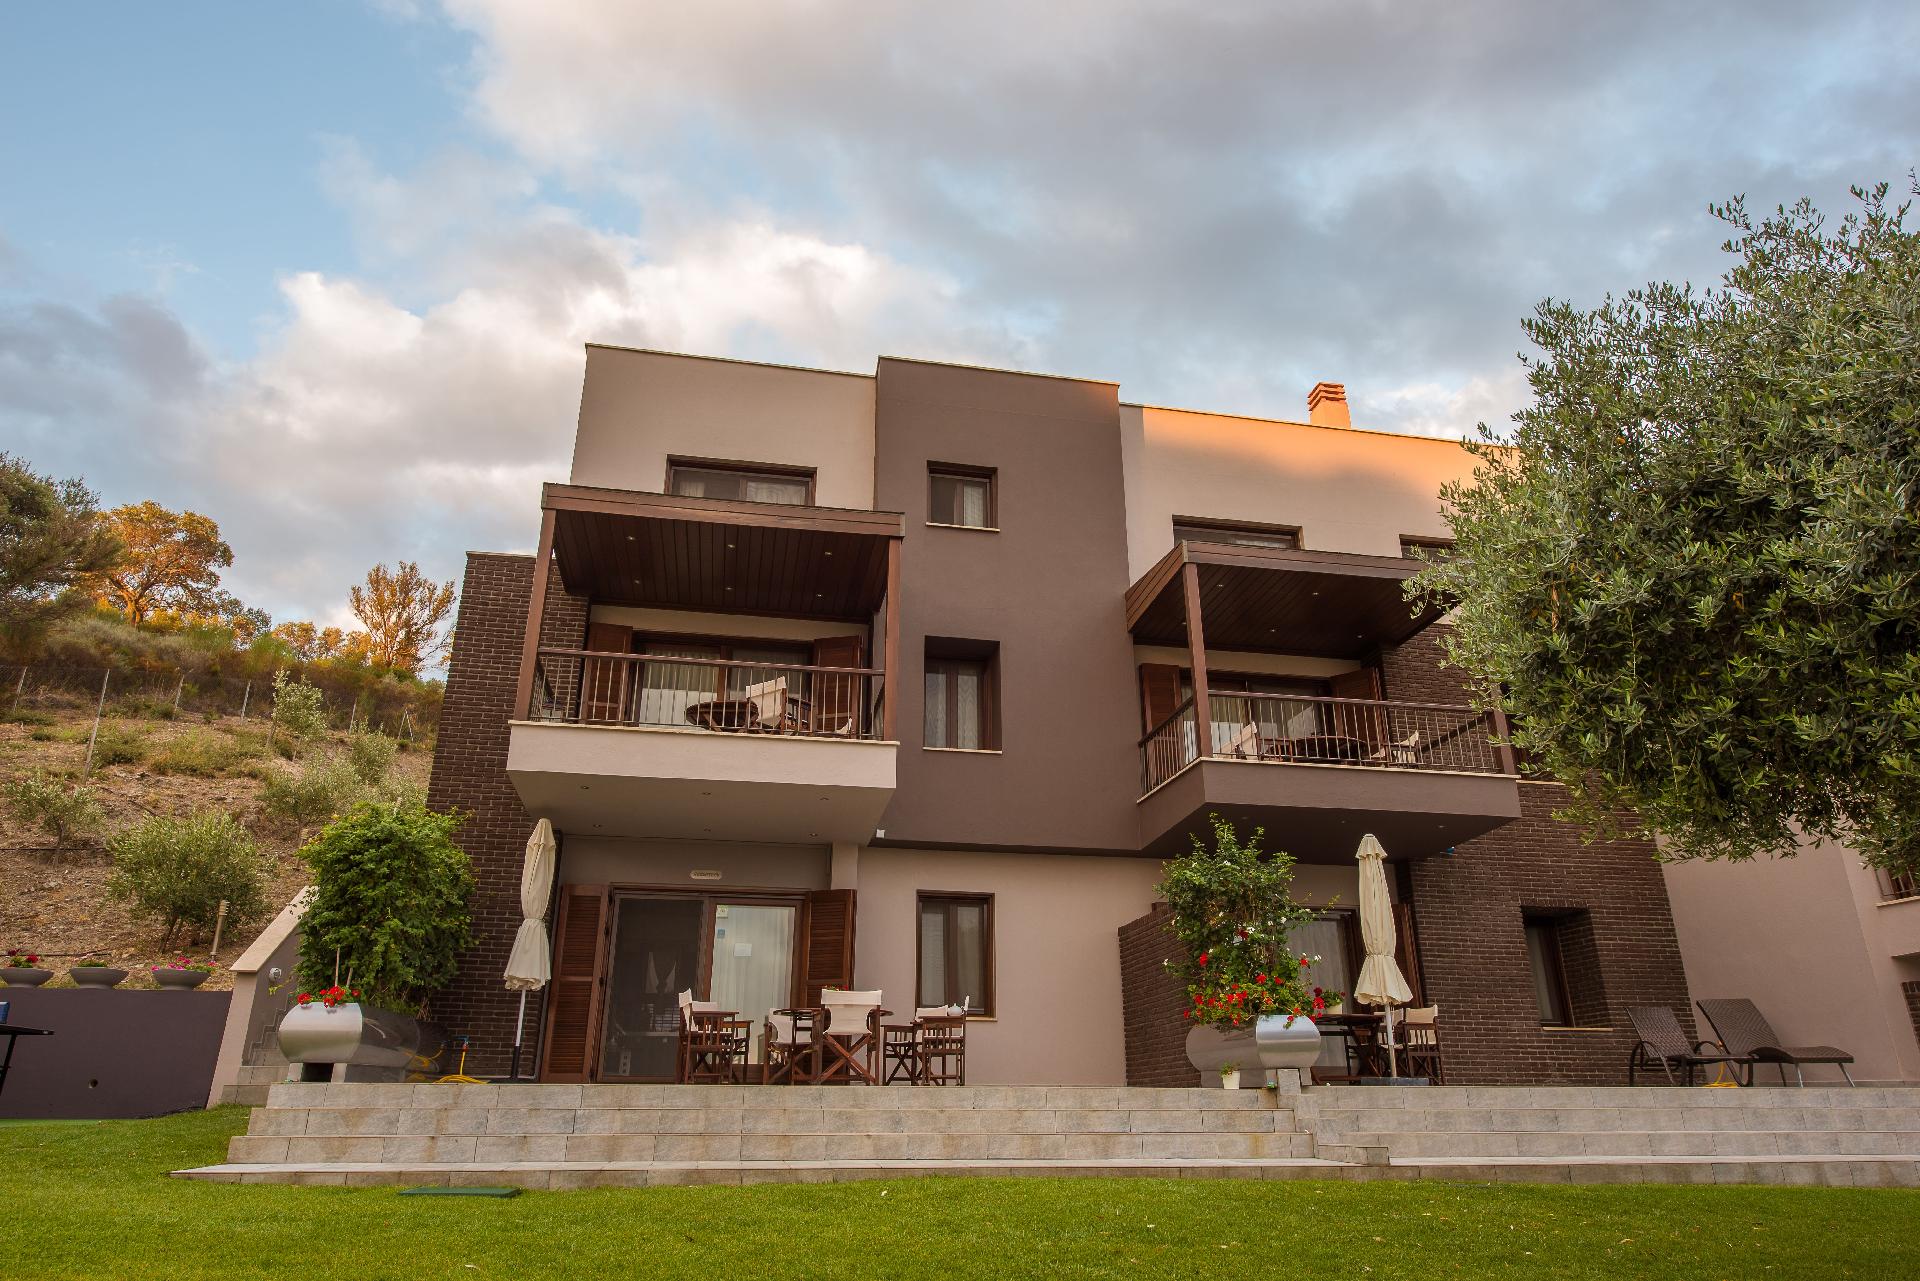 Ferienhaus für 4 Personen in Koumitsa, Griech Ferienhaus in Griechenland